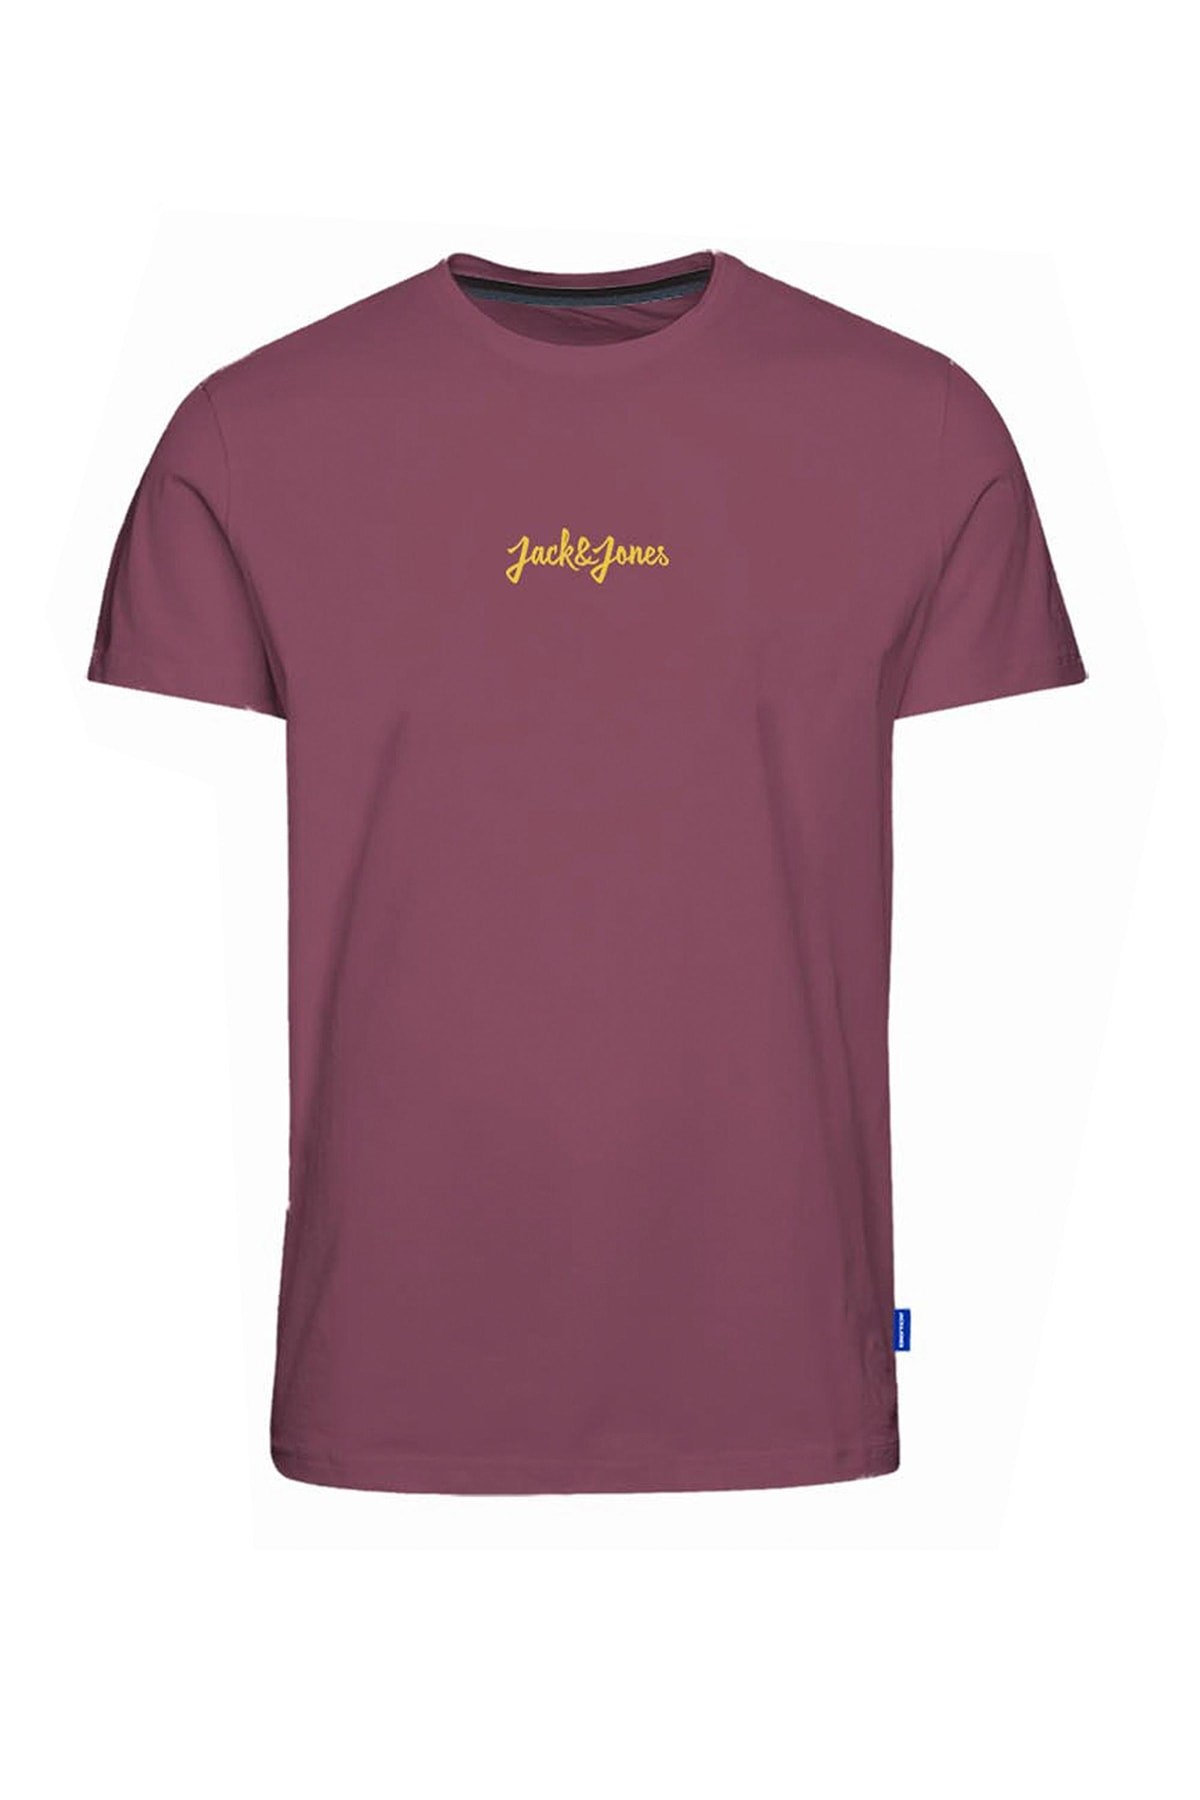 Jack Jones Erkek T-Shirt 12185790 Hawthorn Rose